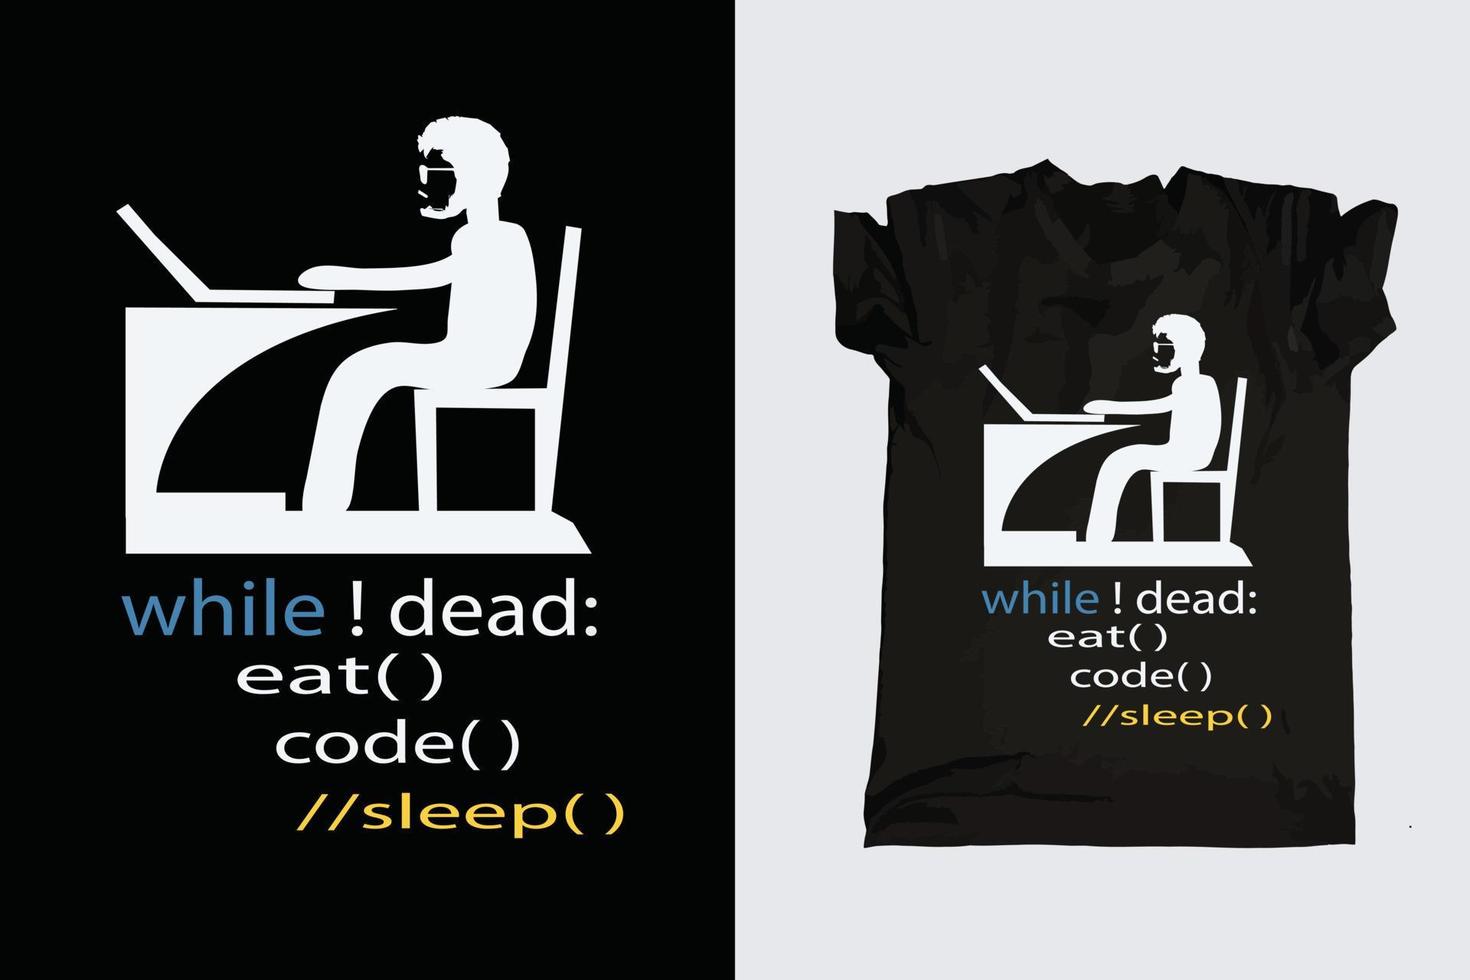 Computerprogrammierer-Typografie-T - Shirt vektor